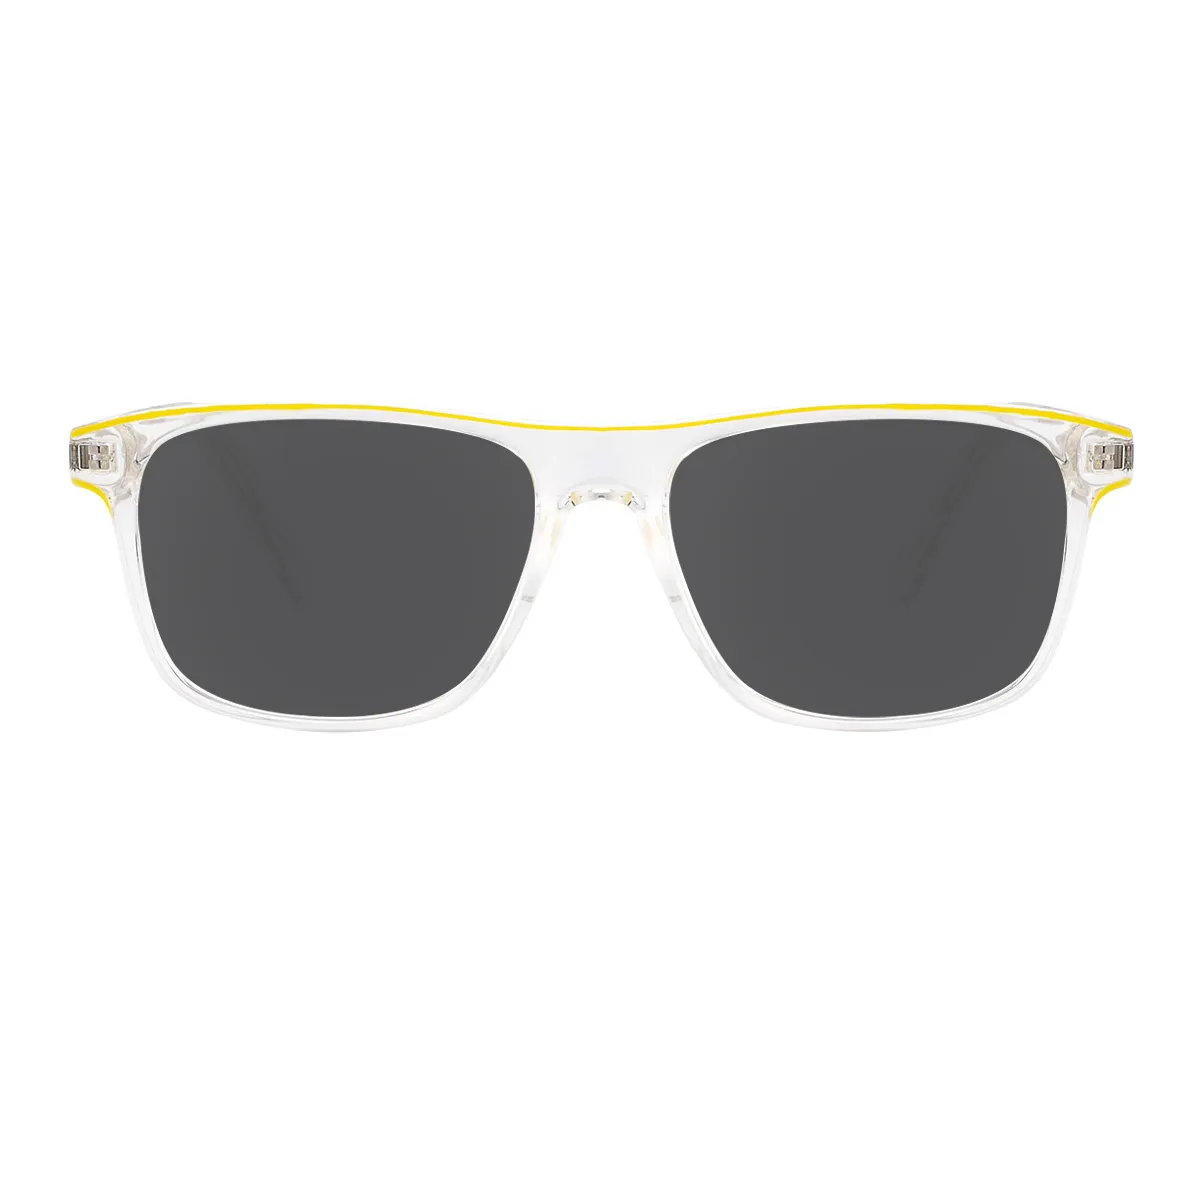 Fashion Browline Black/Gold  Sunglasses for Women & Men